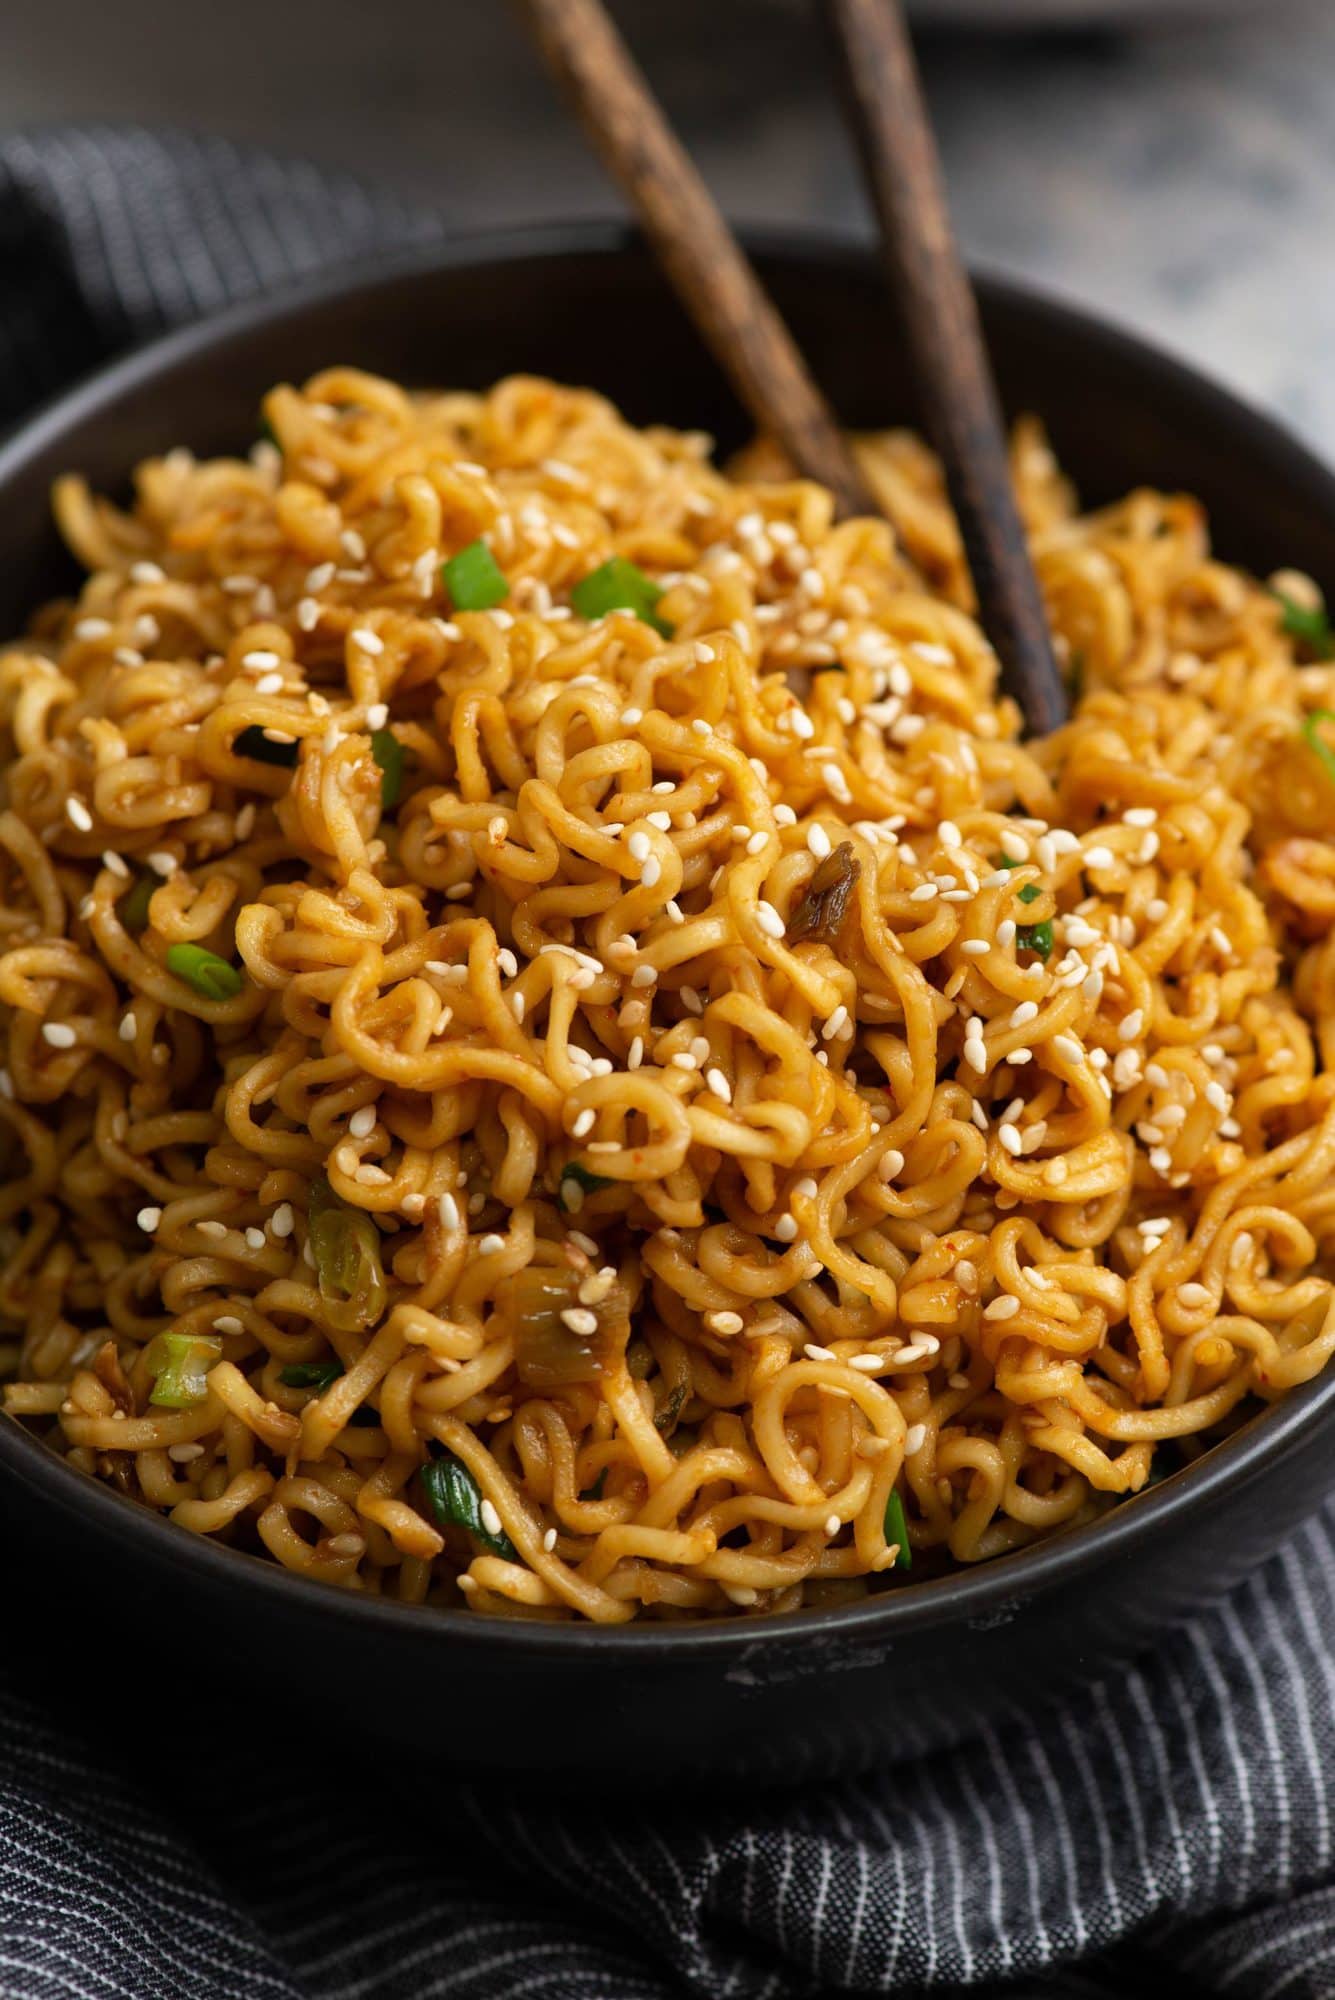 Garlic sesame noodle is served in a black bowl with wooden chopsticks.
